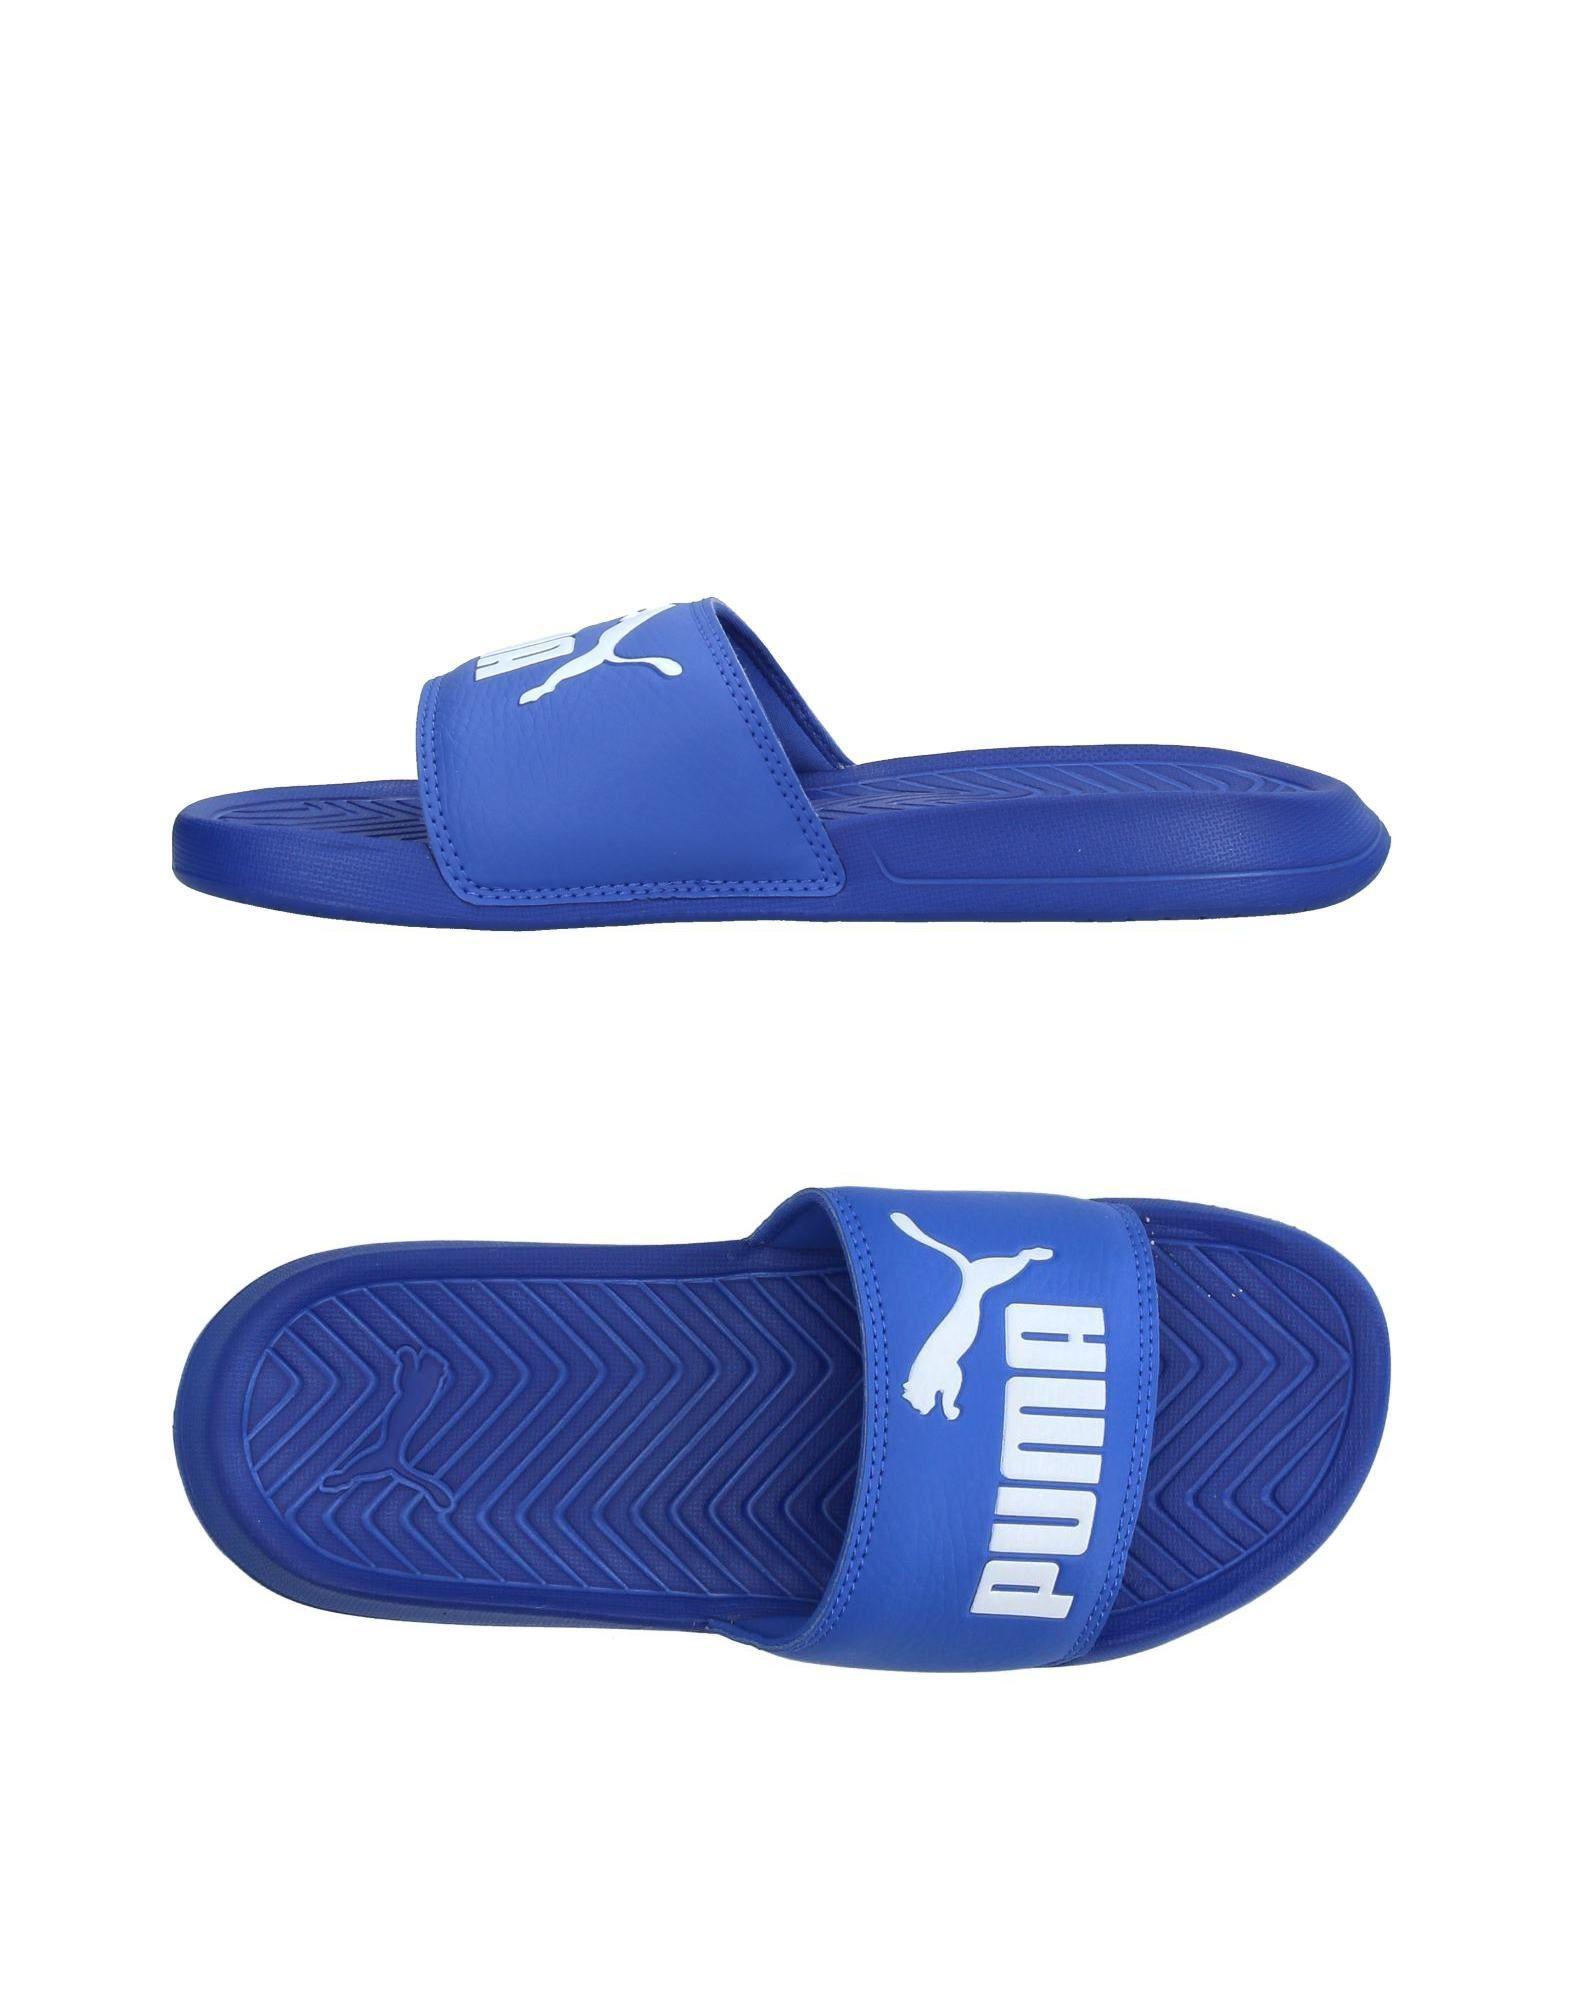 PUMA Sandals in Blue for Men - Lyst